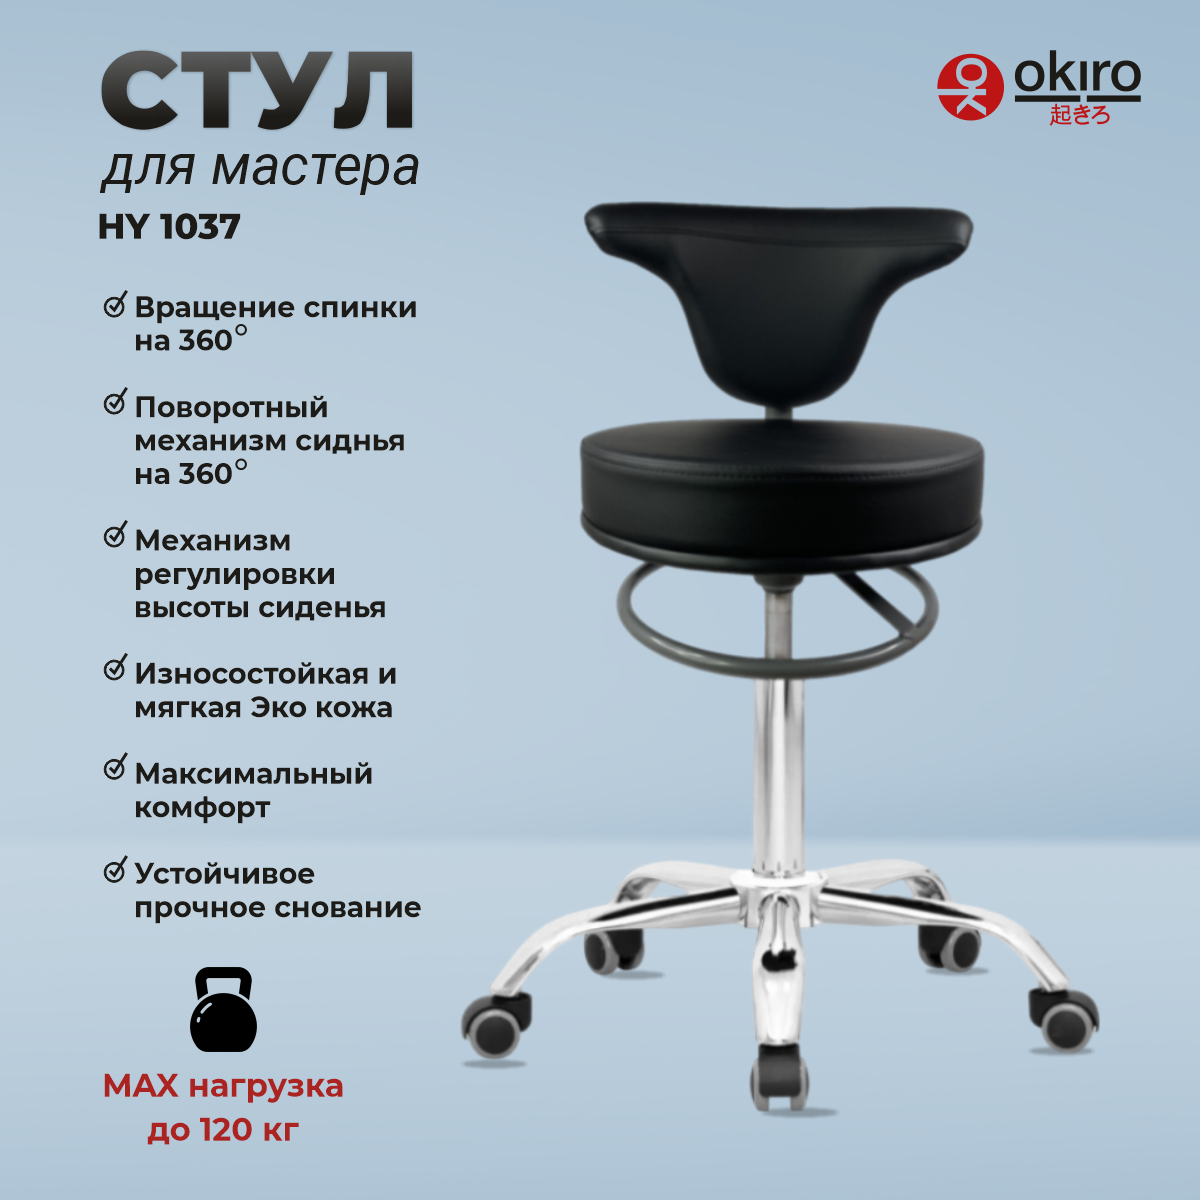 OKIRO / Стул для мастера на колесах со спинкой HY 1037 BL / стул для парикмахера, косметолога